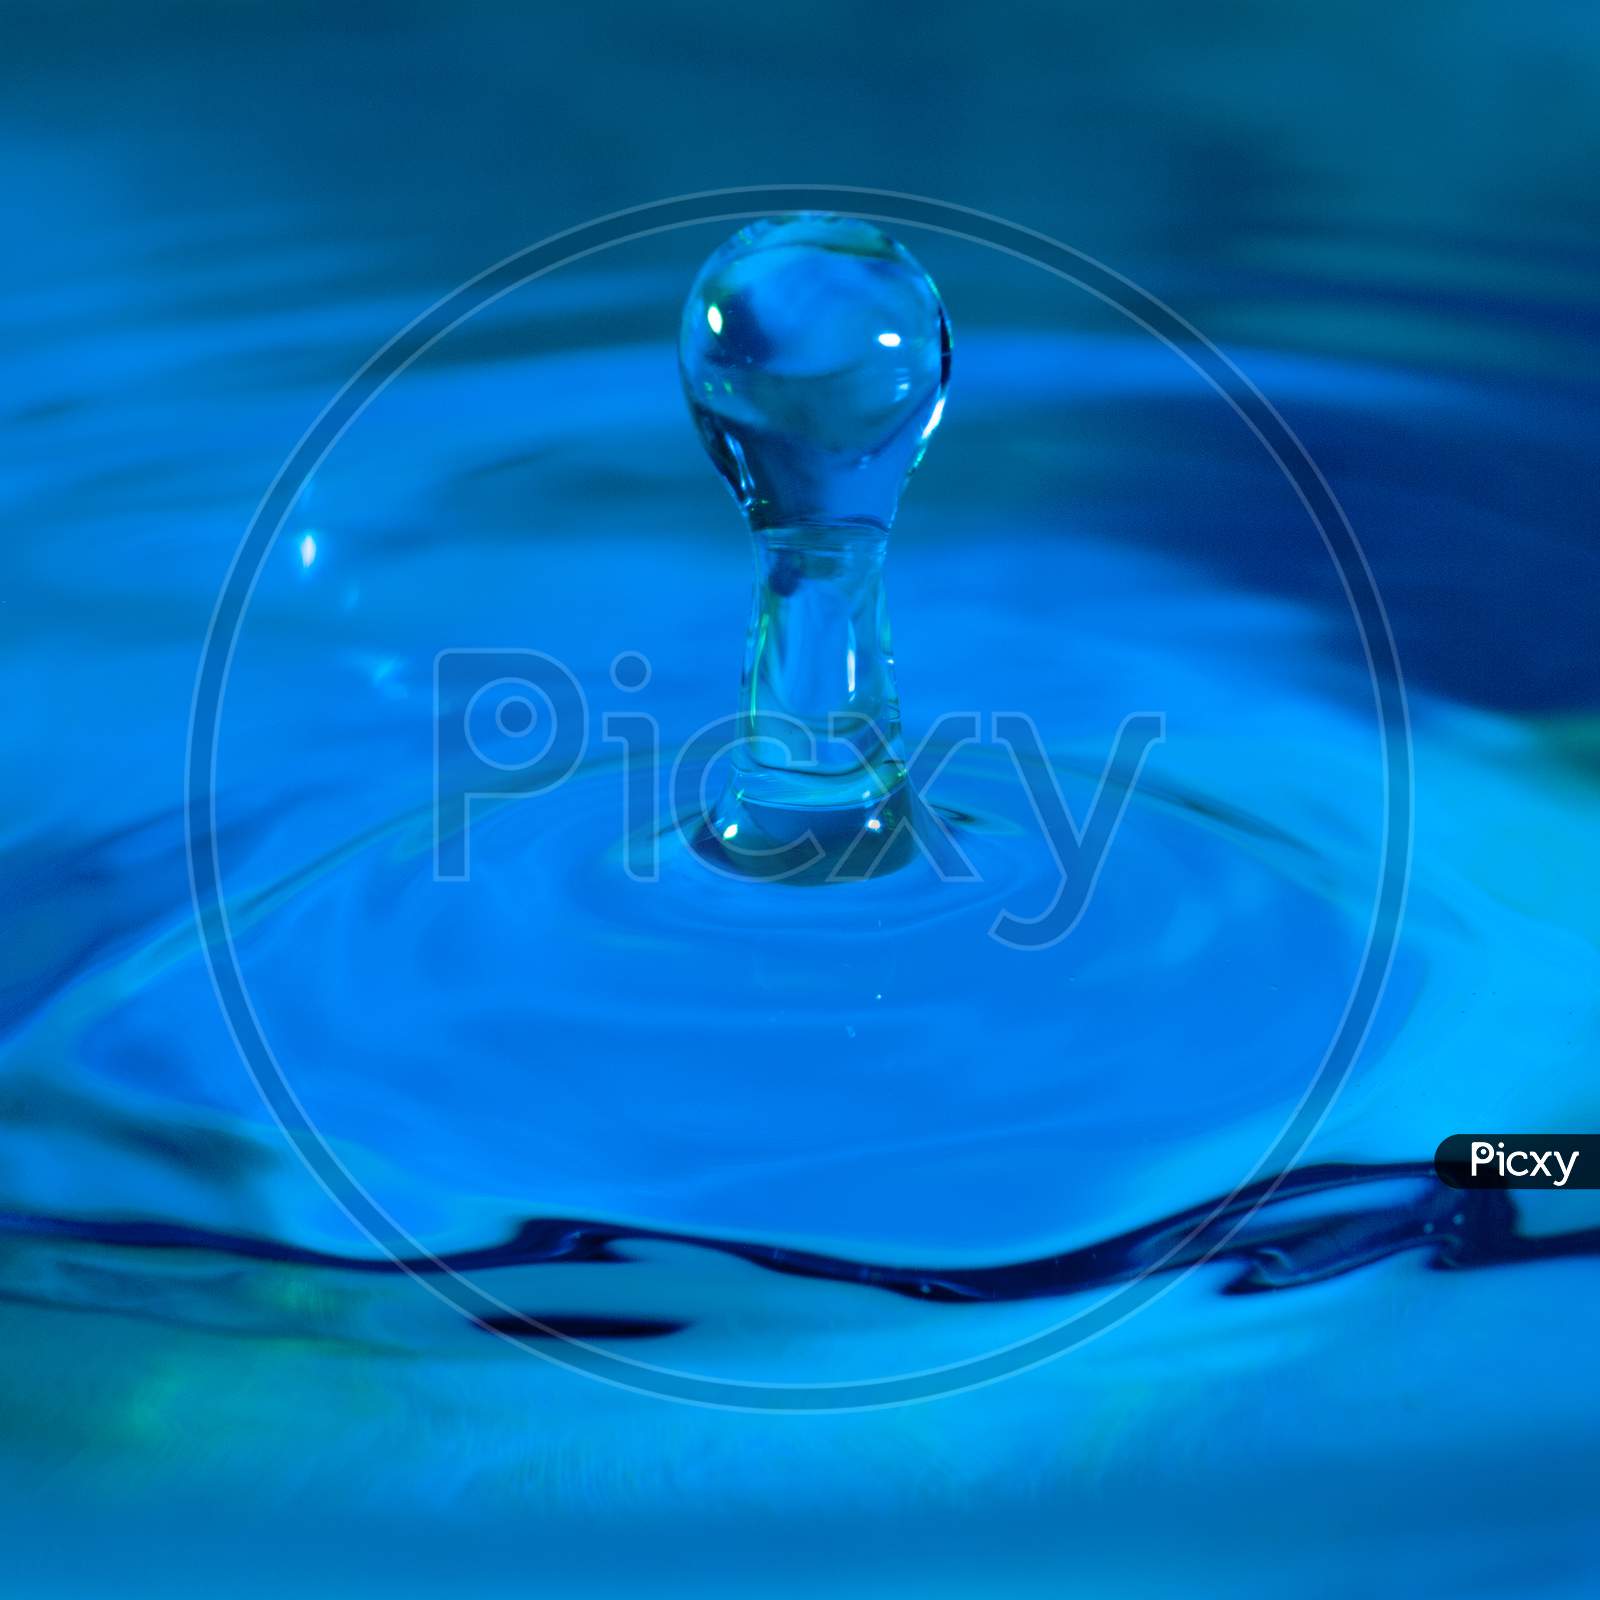 close up photo of water drops splashing creating abstract shape